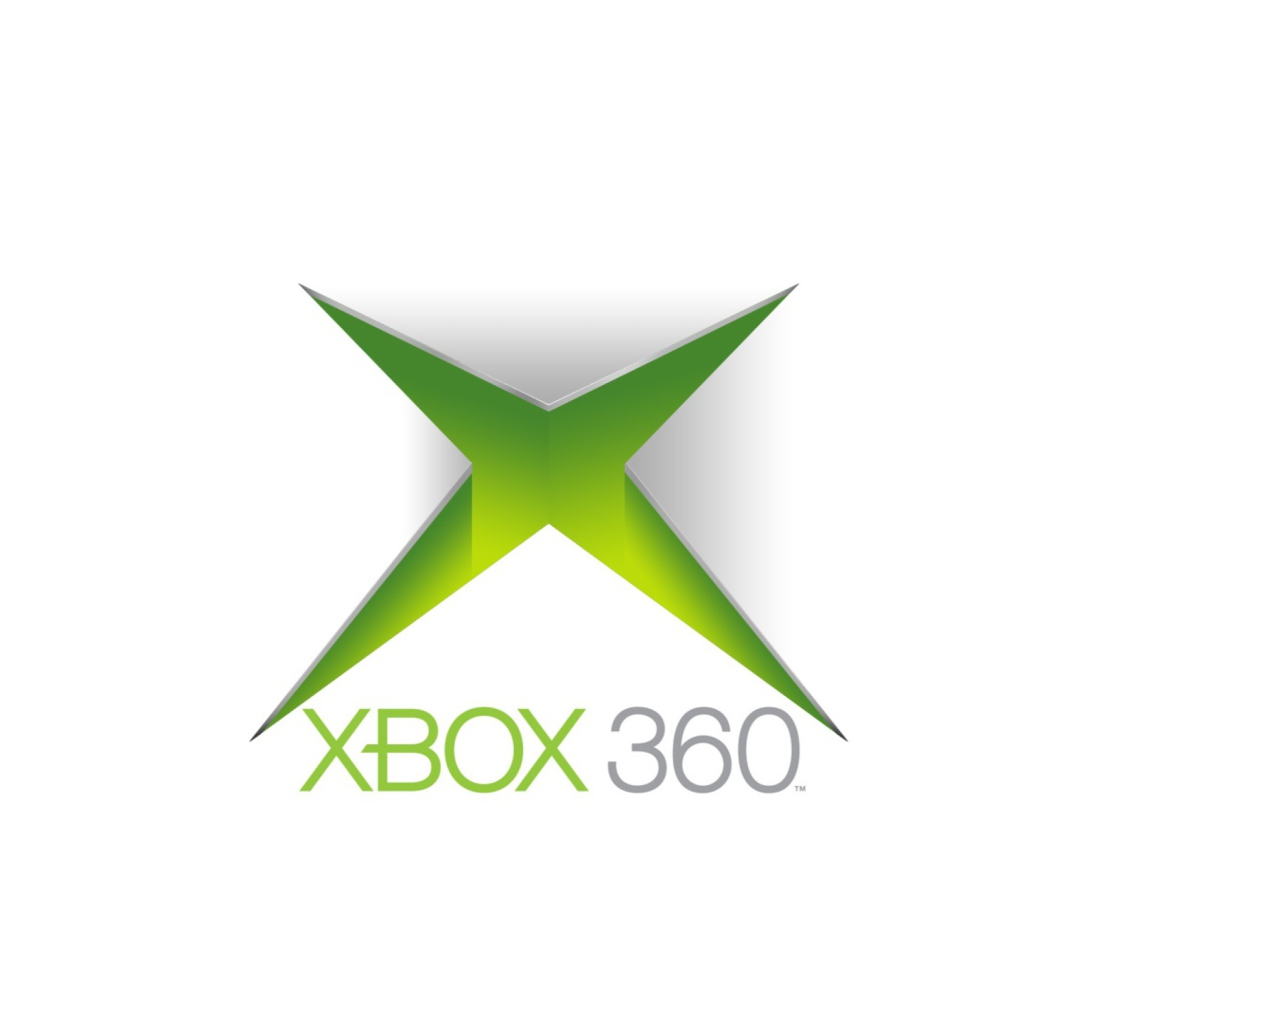 Xbox 360 wallpaper 1280x1024